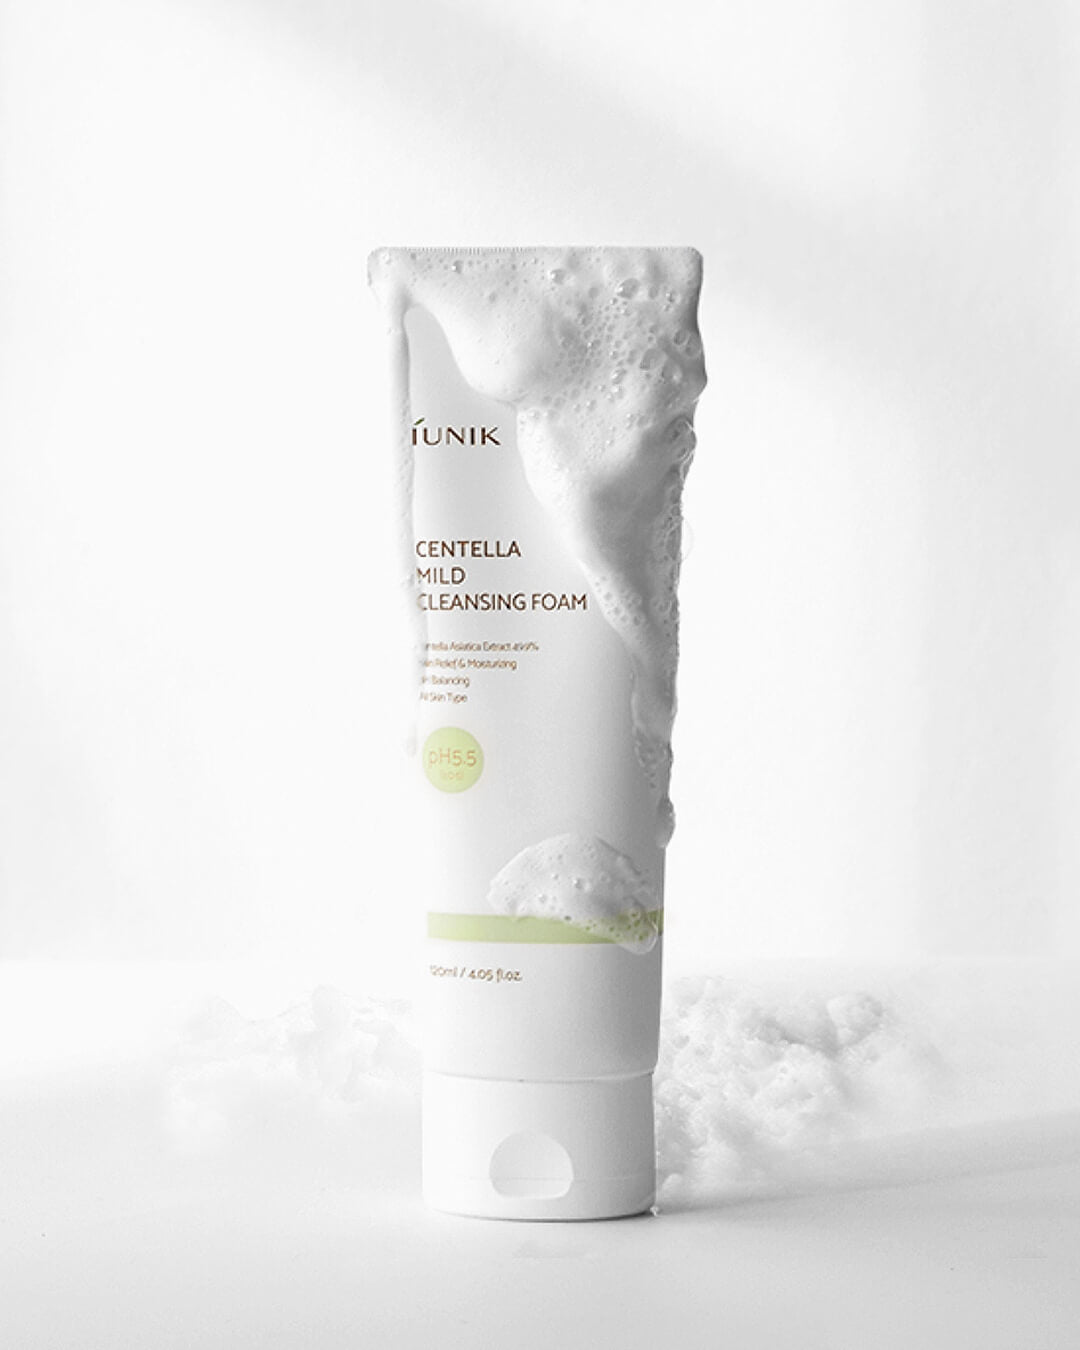 iUnik Centella Mild Cleansing Foam Ohlolly Korean Skincare Cleanser